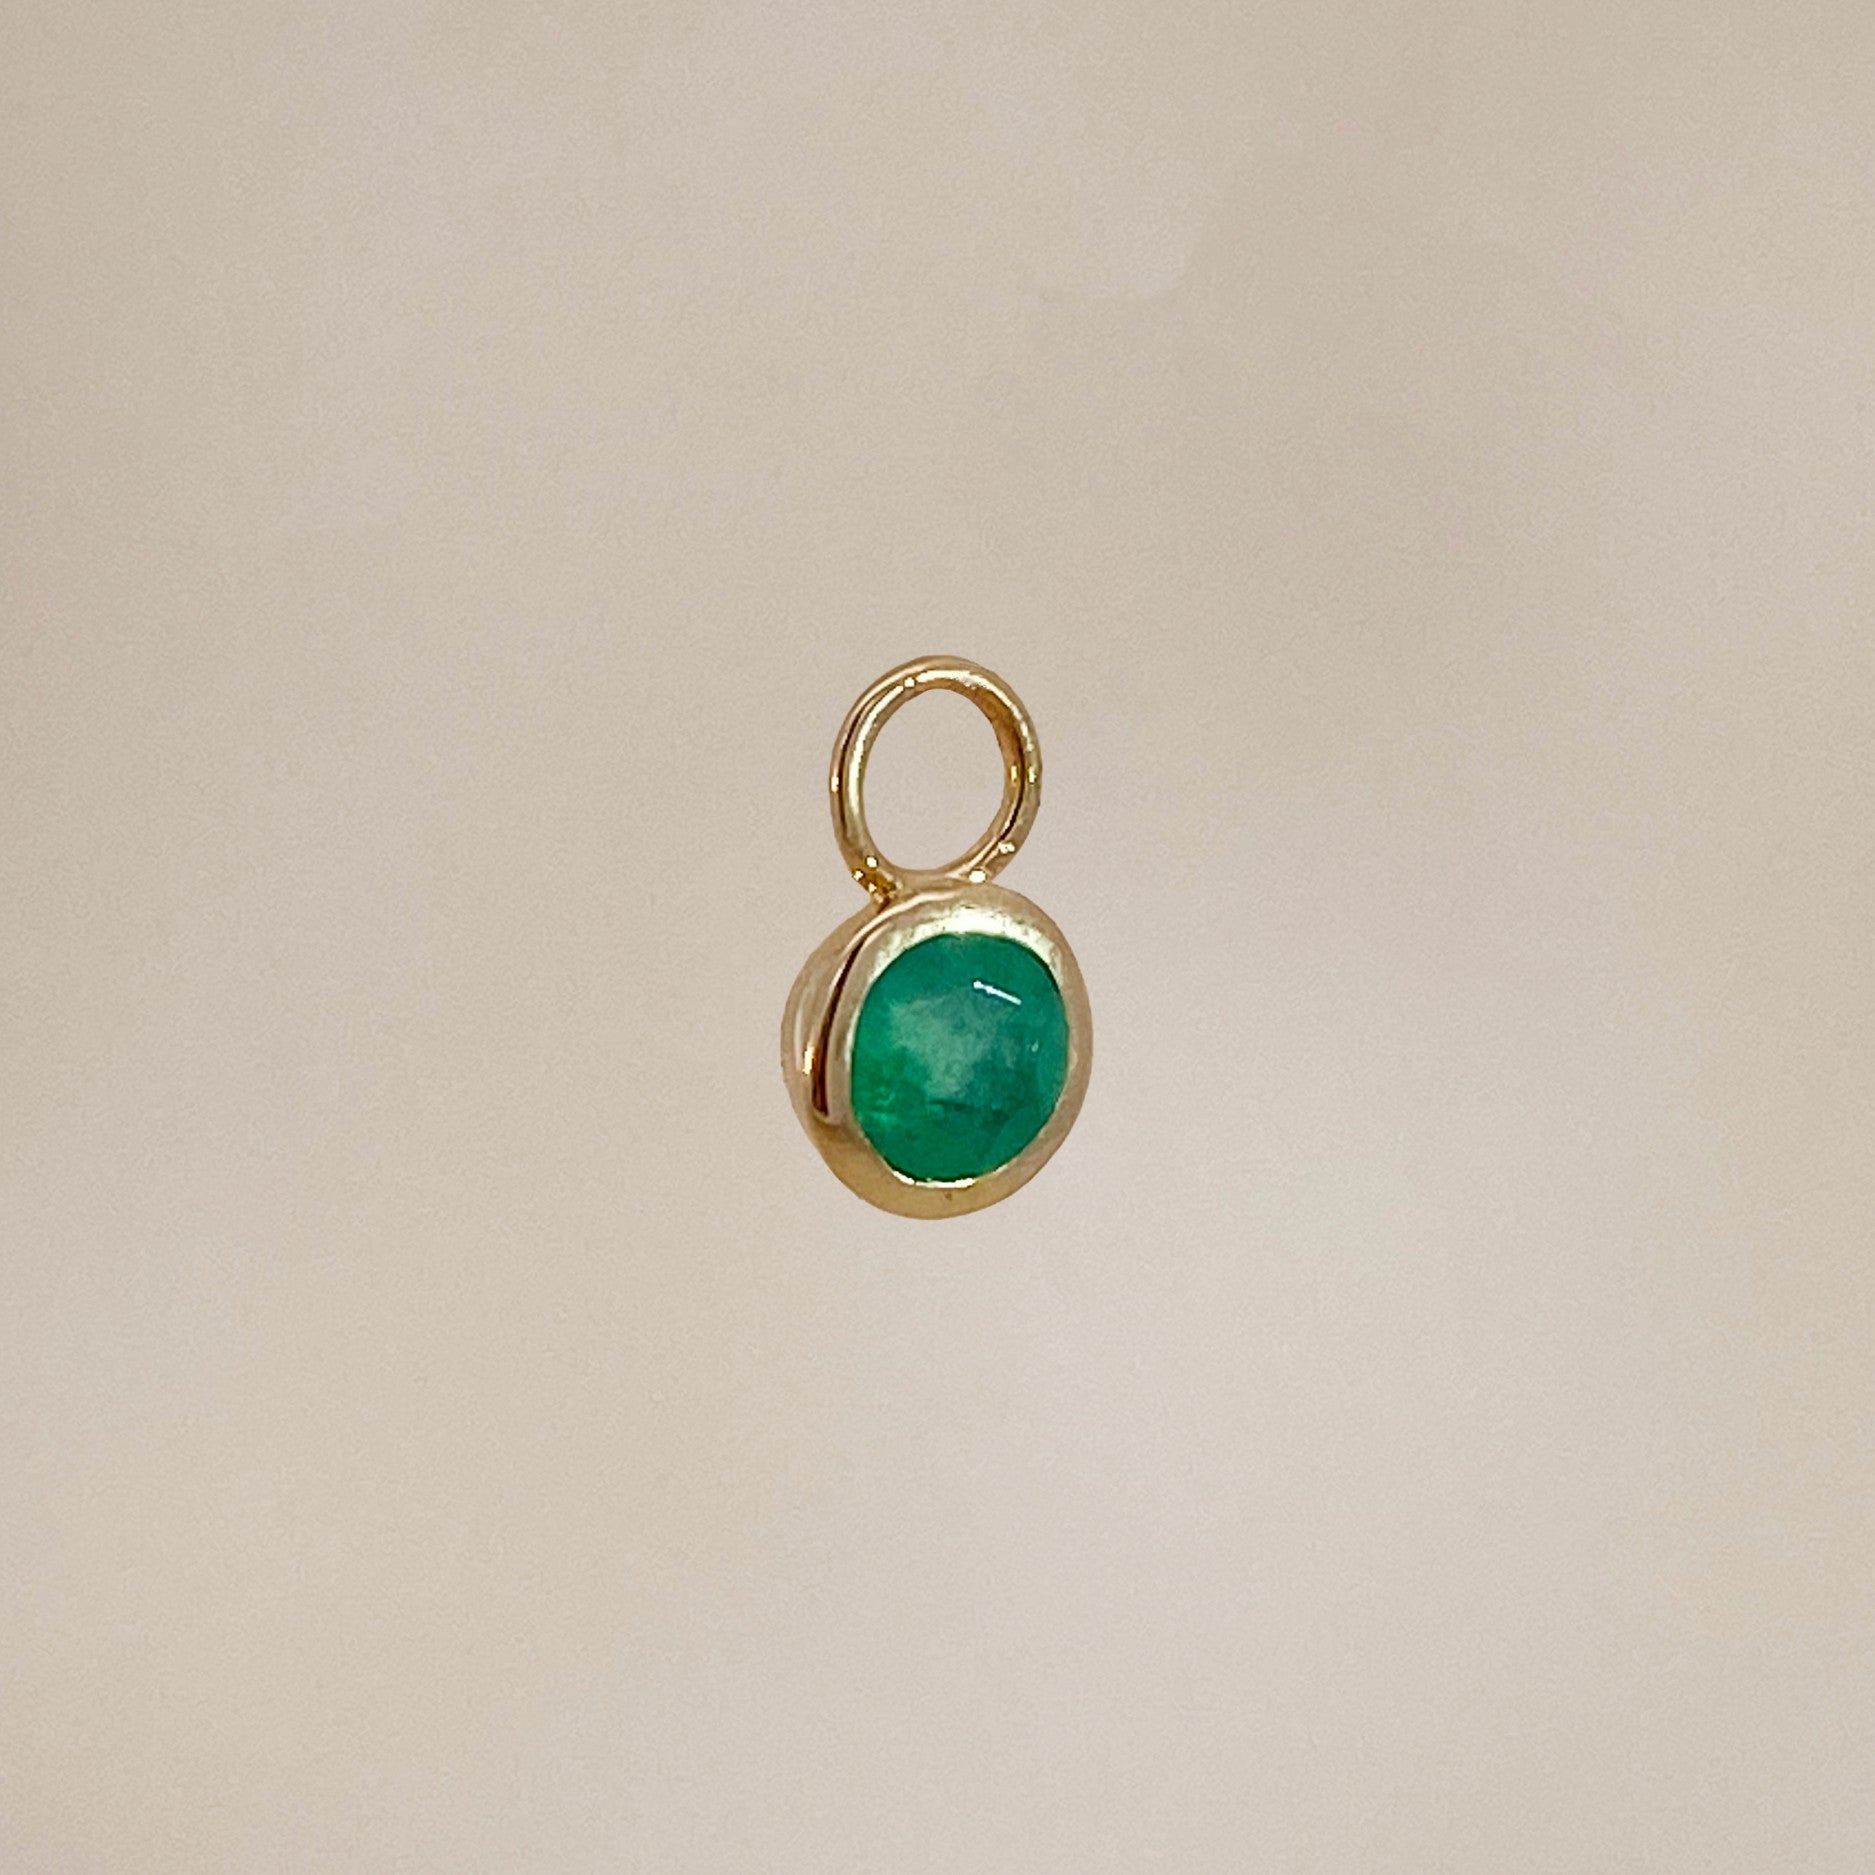 Emerald charm